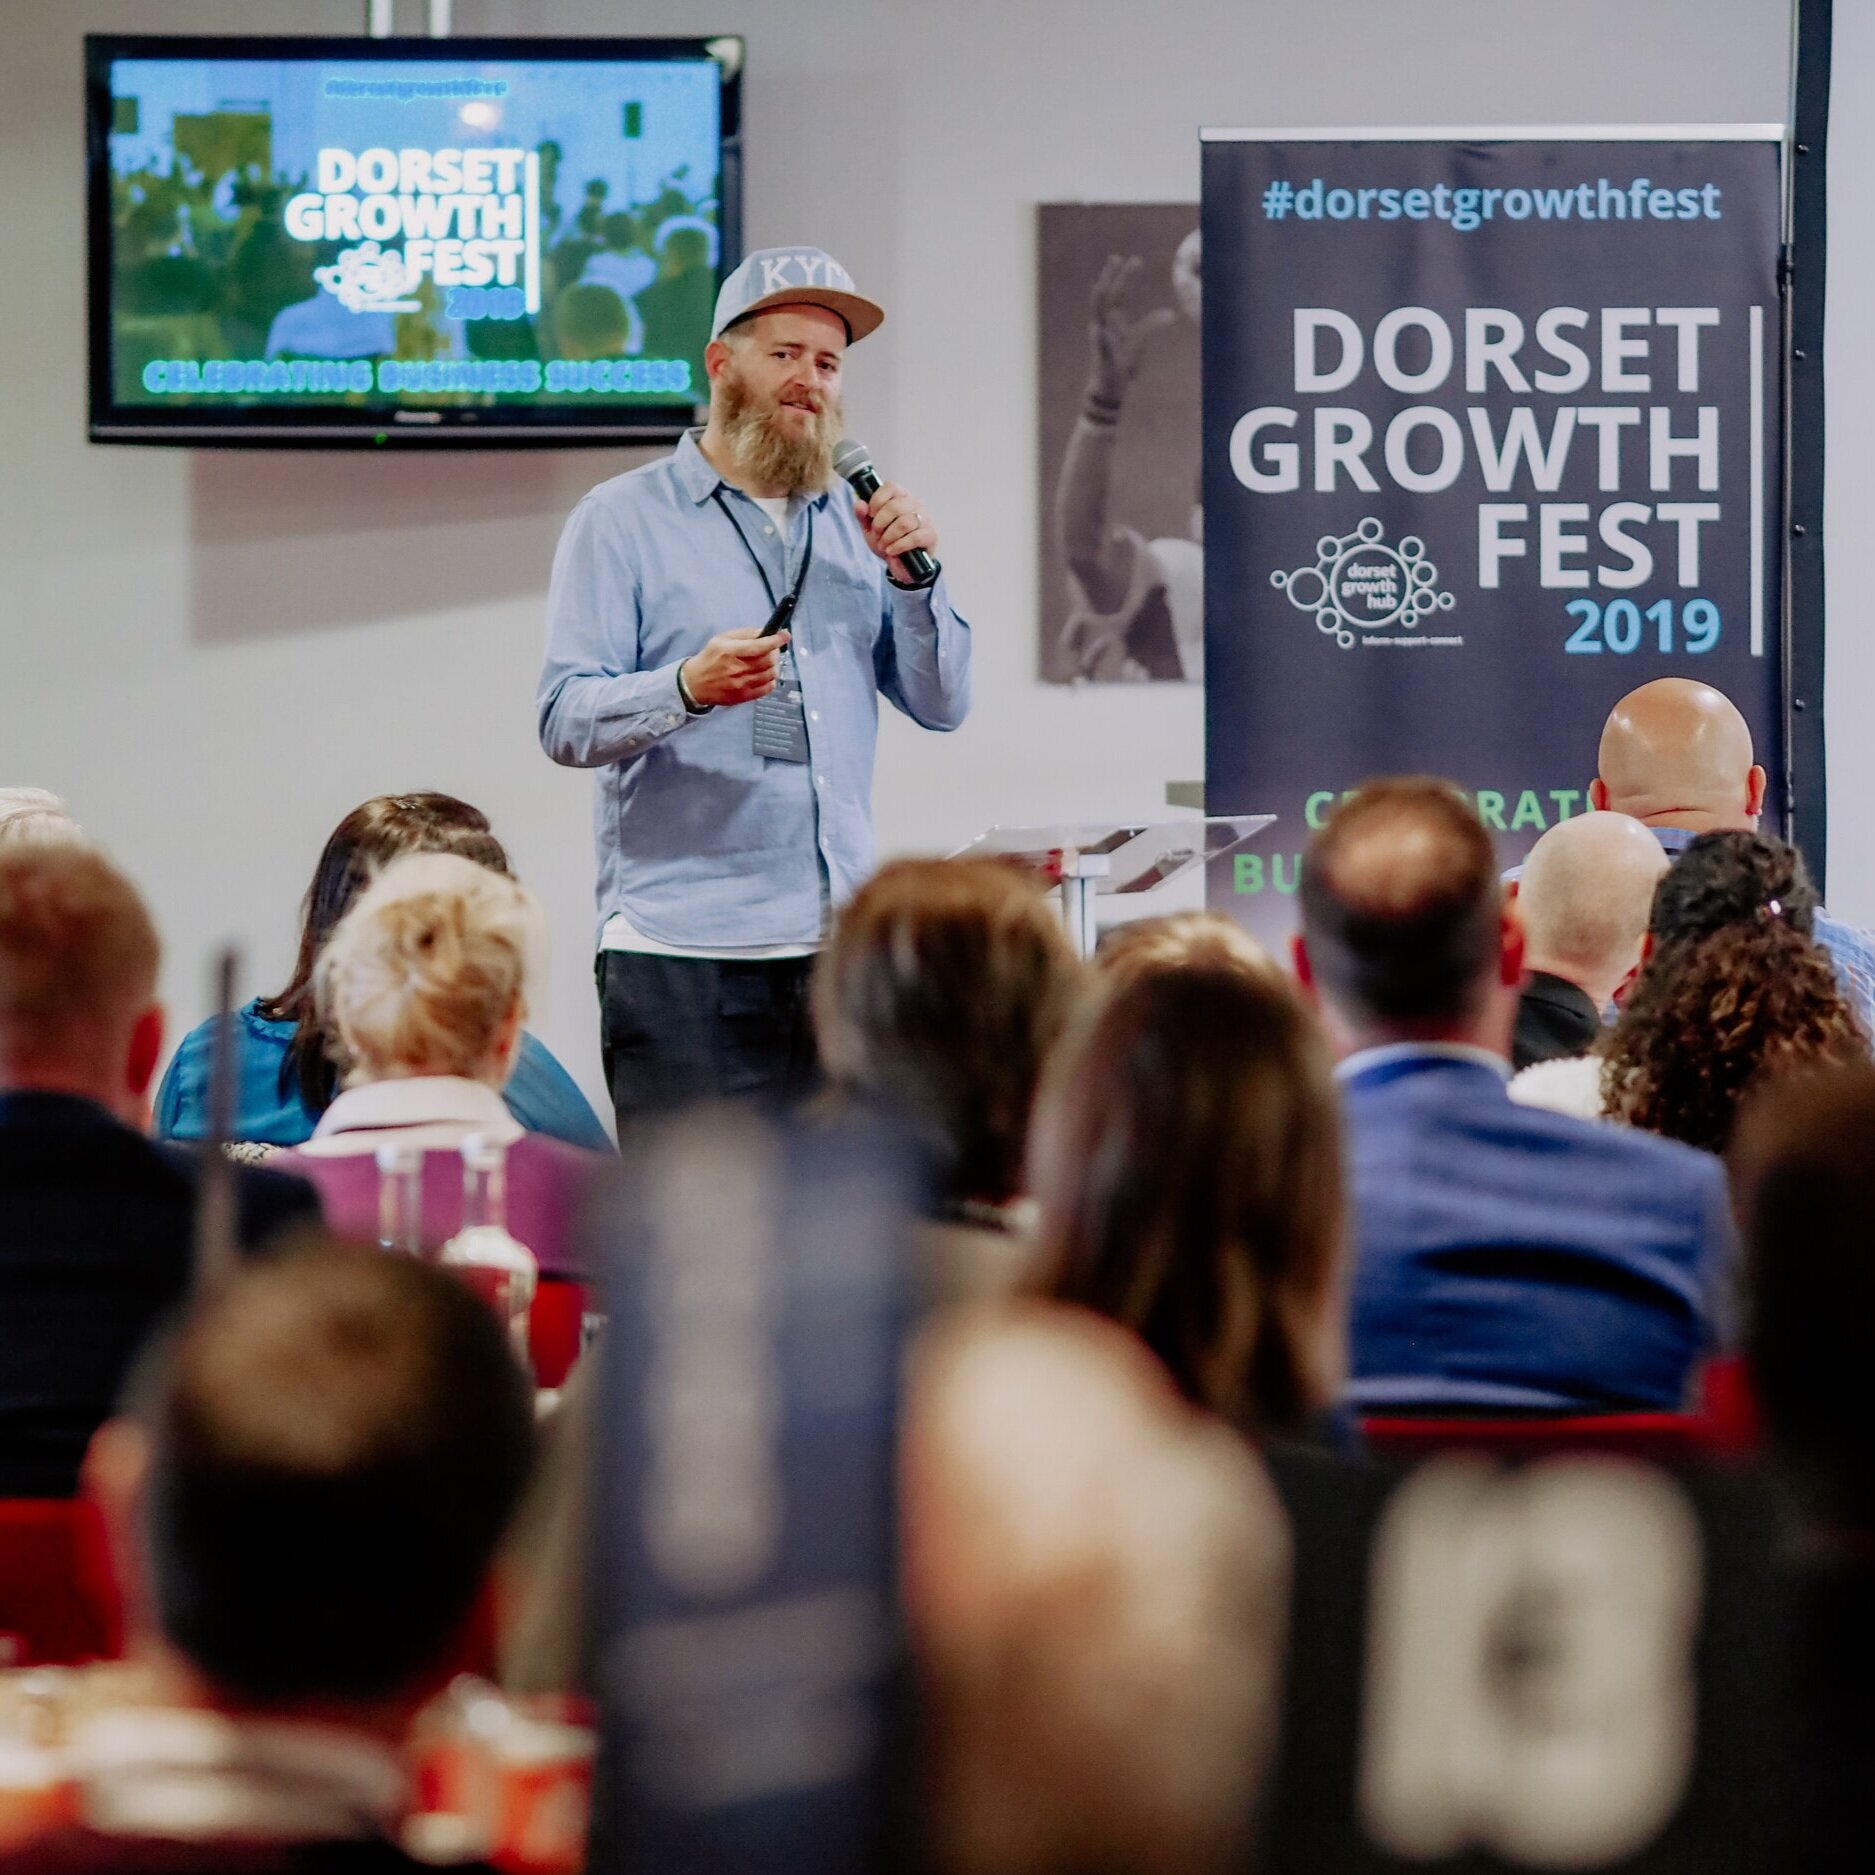 Dorset Growth Fest